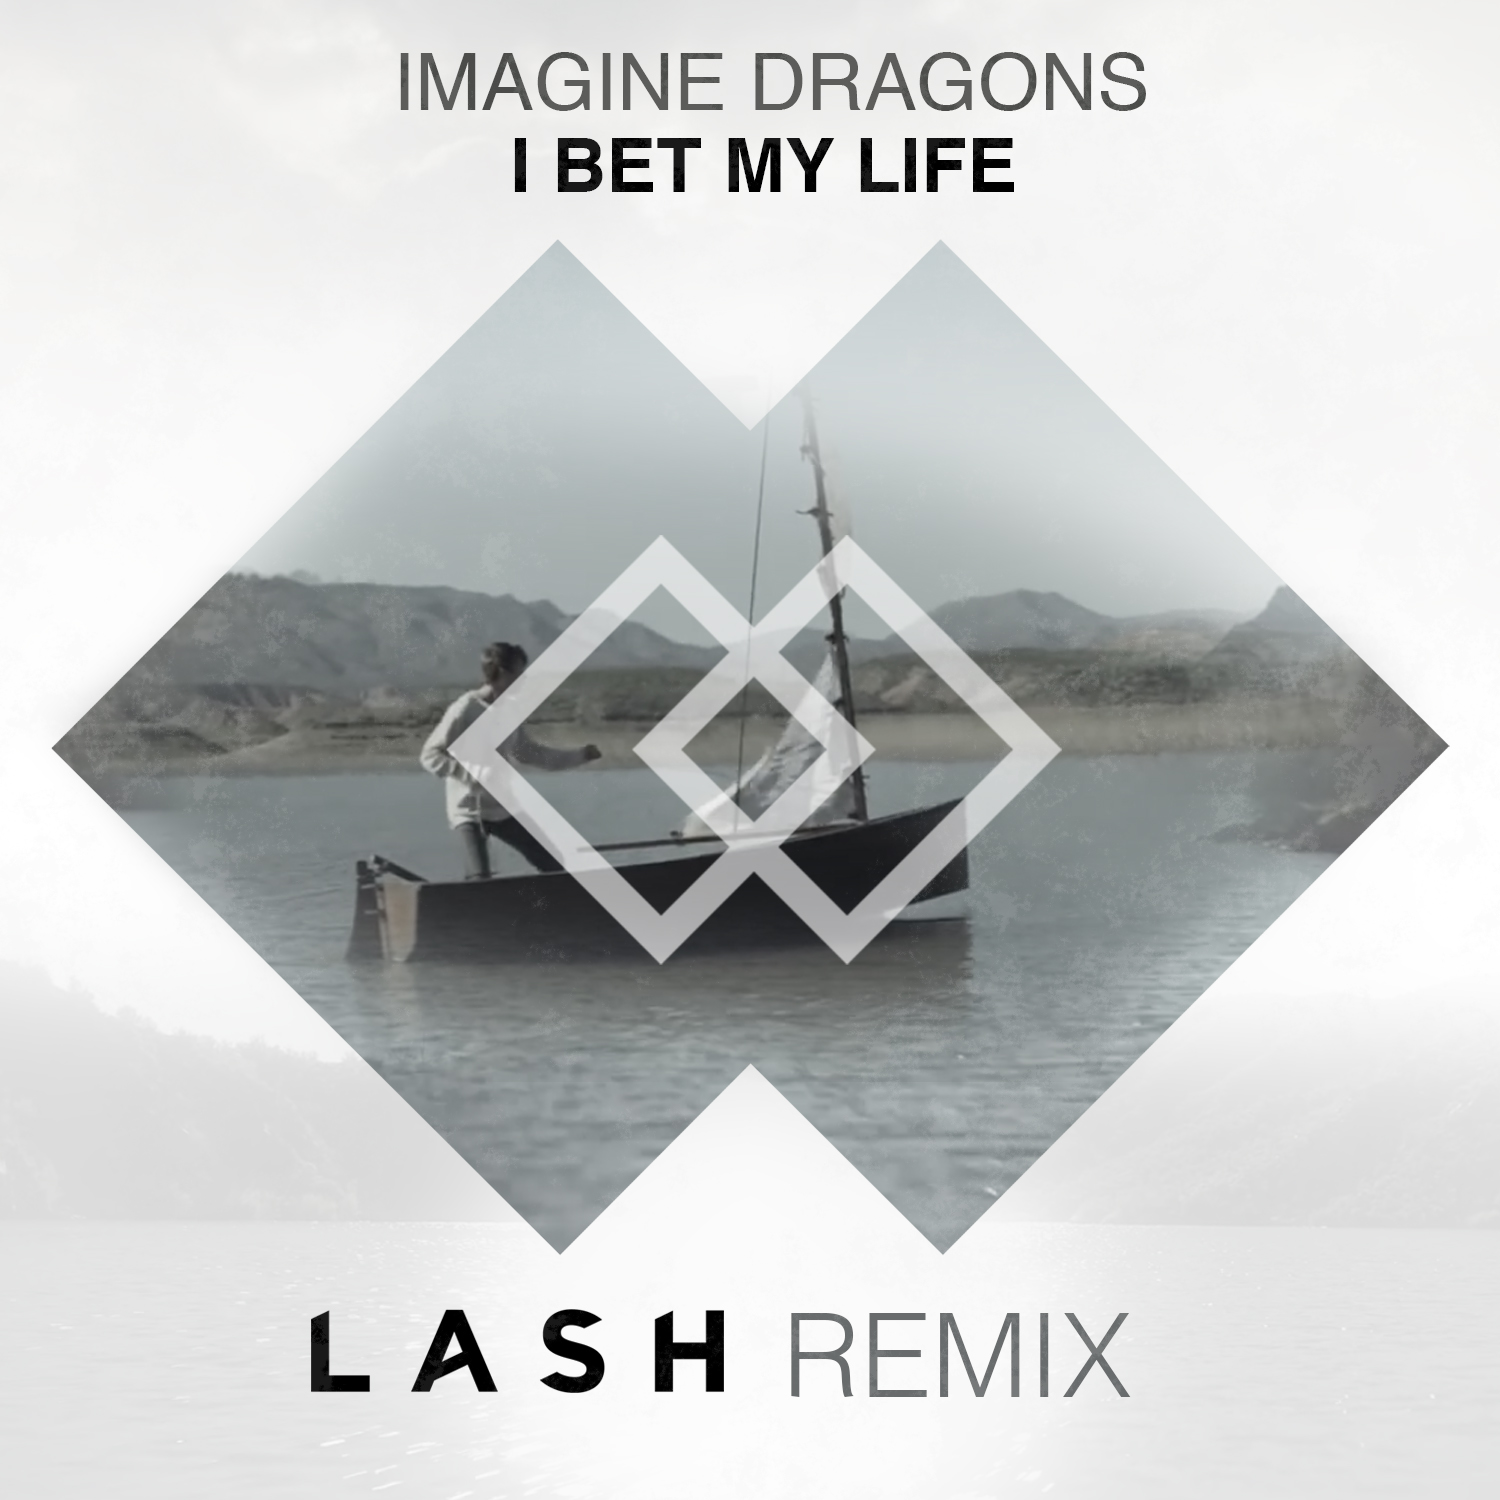 Imagine the Remixes. My life imagine